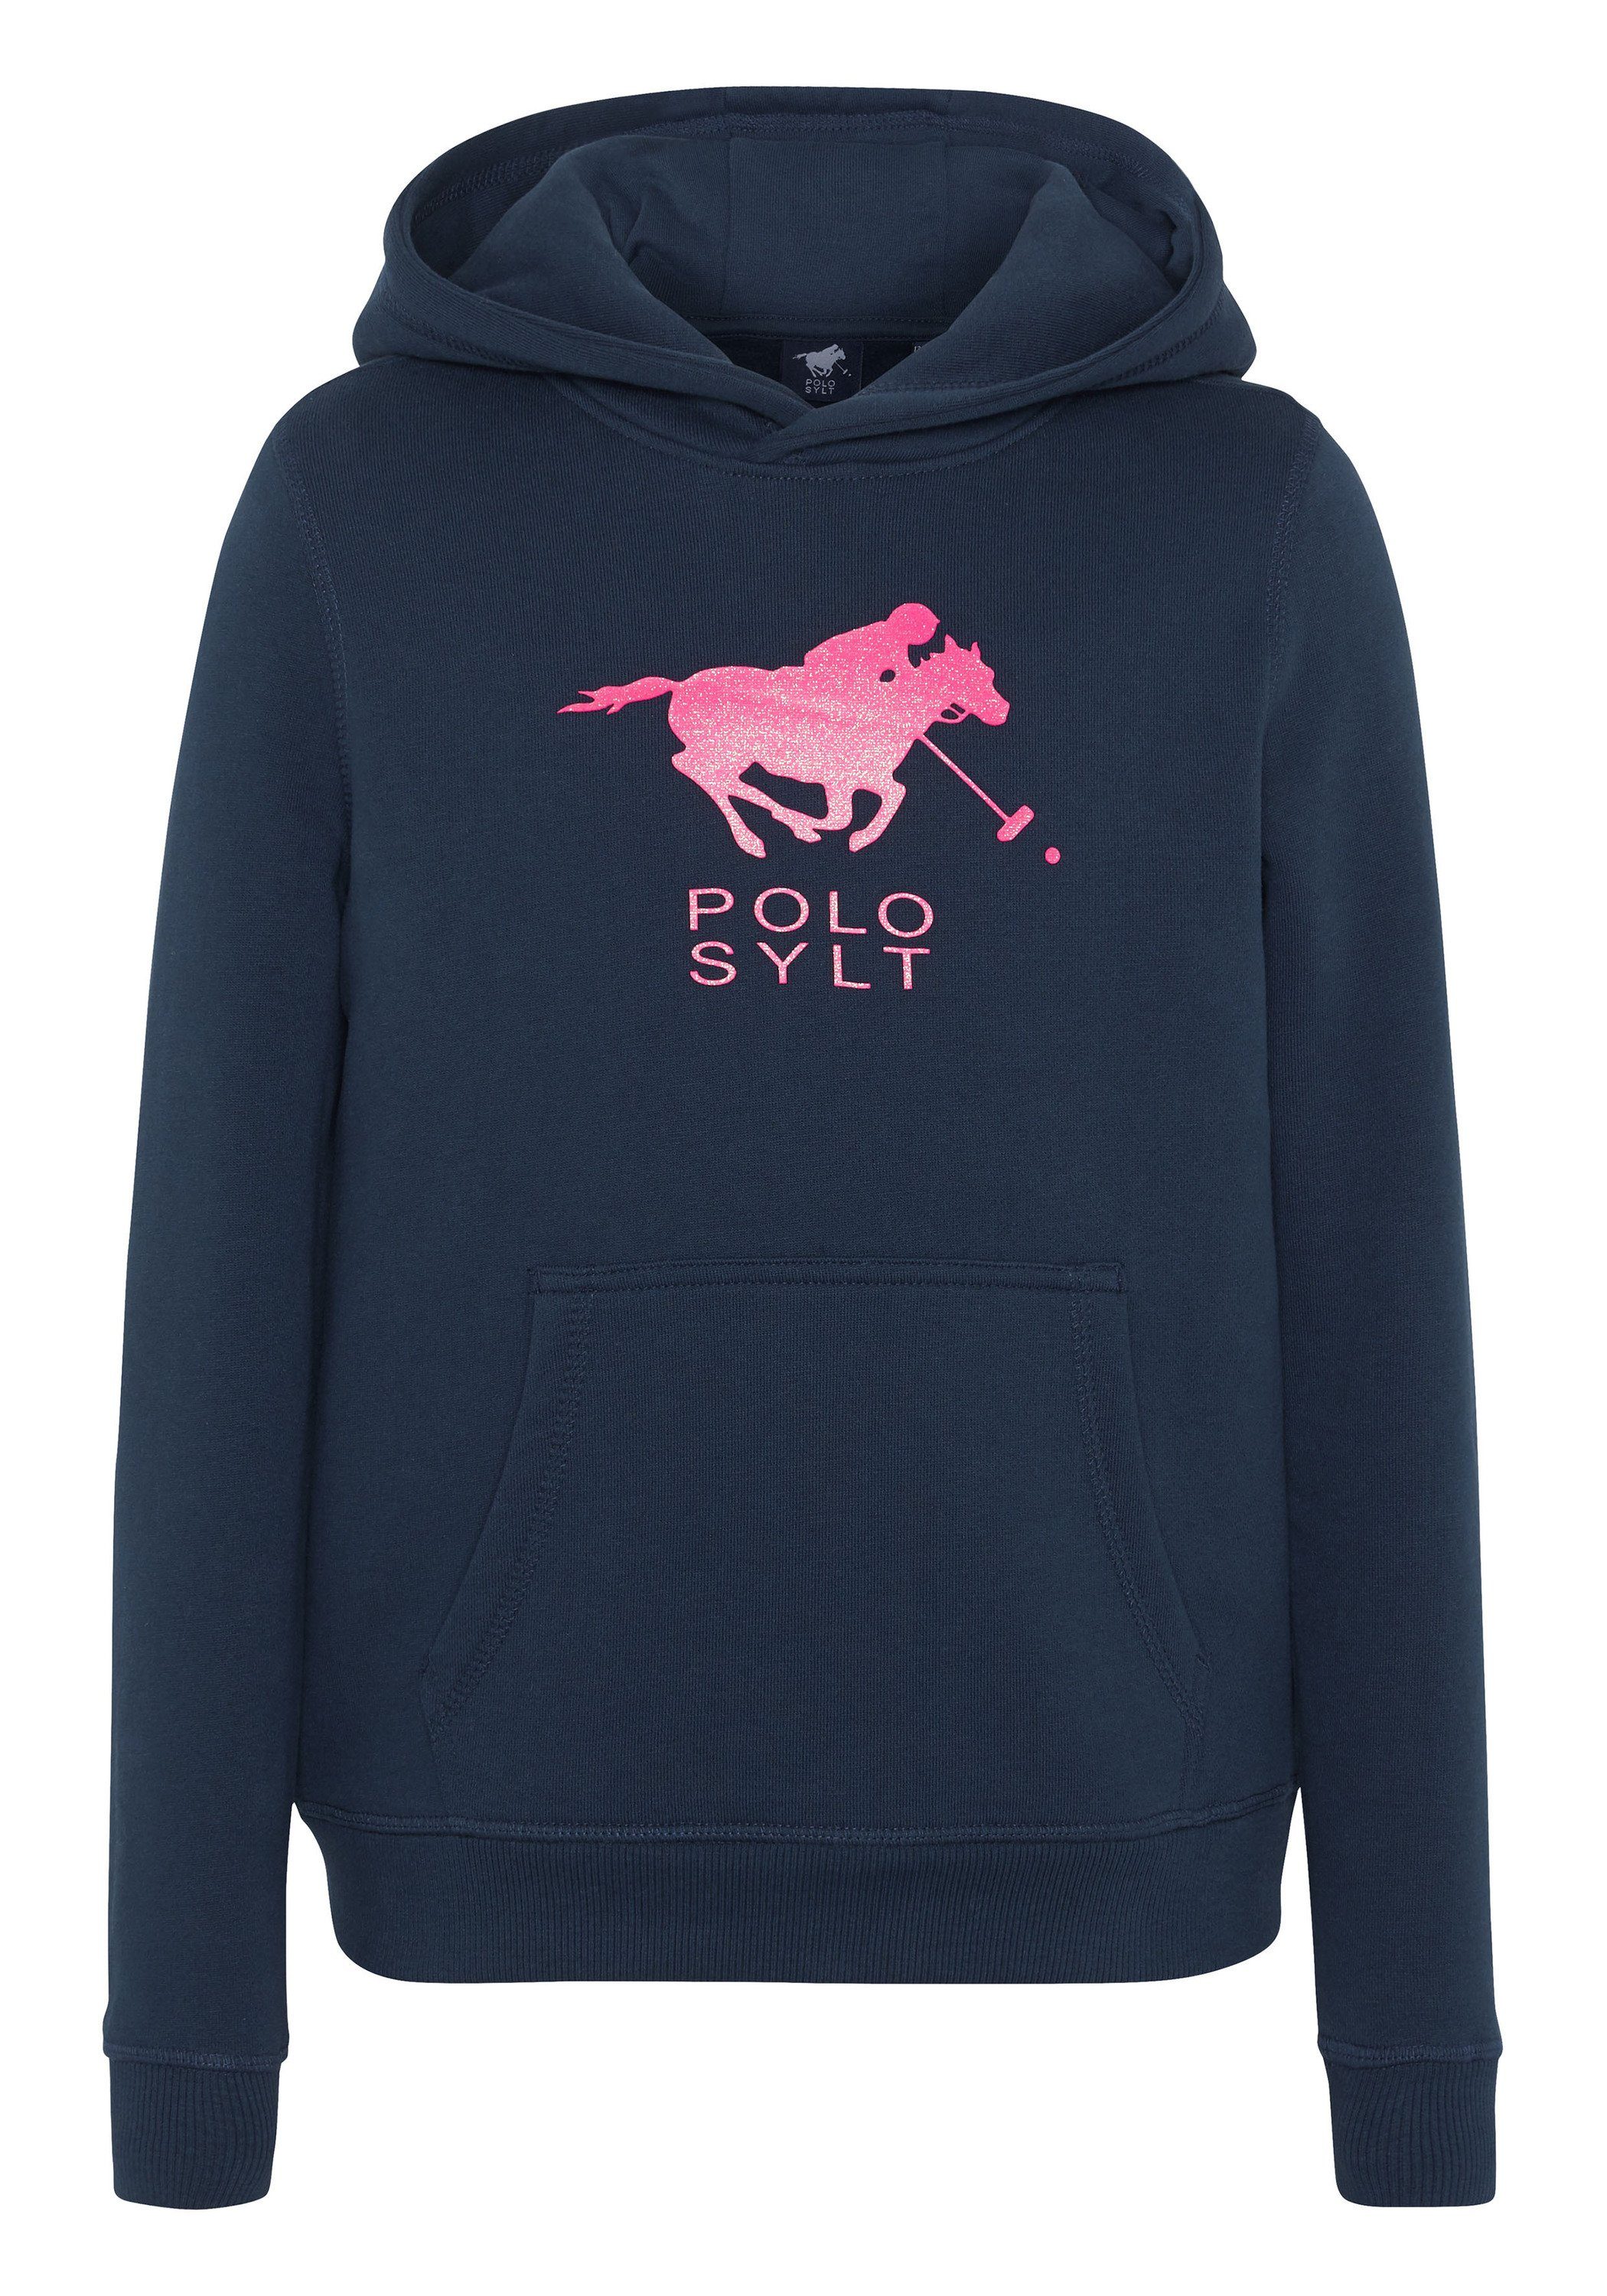 glitzerndem mit Total Sylt Label-Motiv Sweatshirt Eclipse Polo